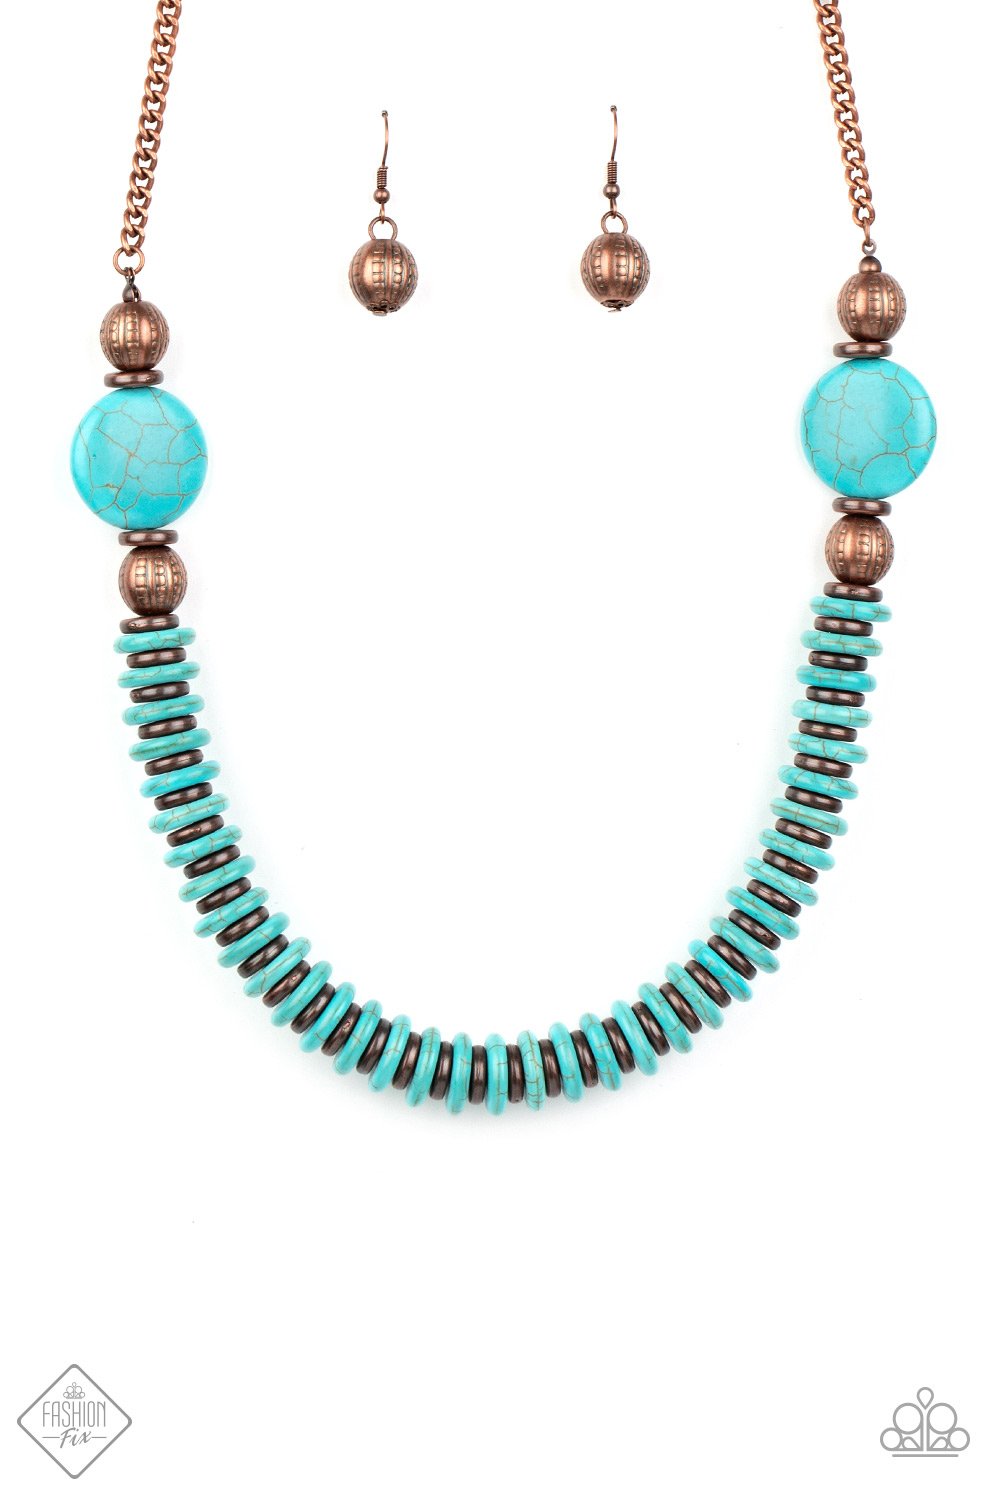 . Desert Revival - Copper/Turquoise Necklace